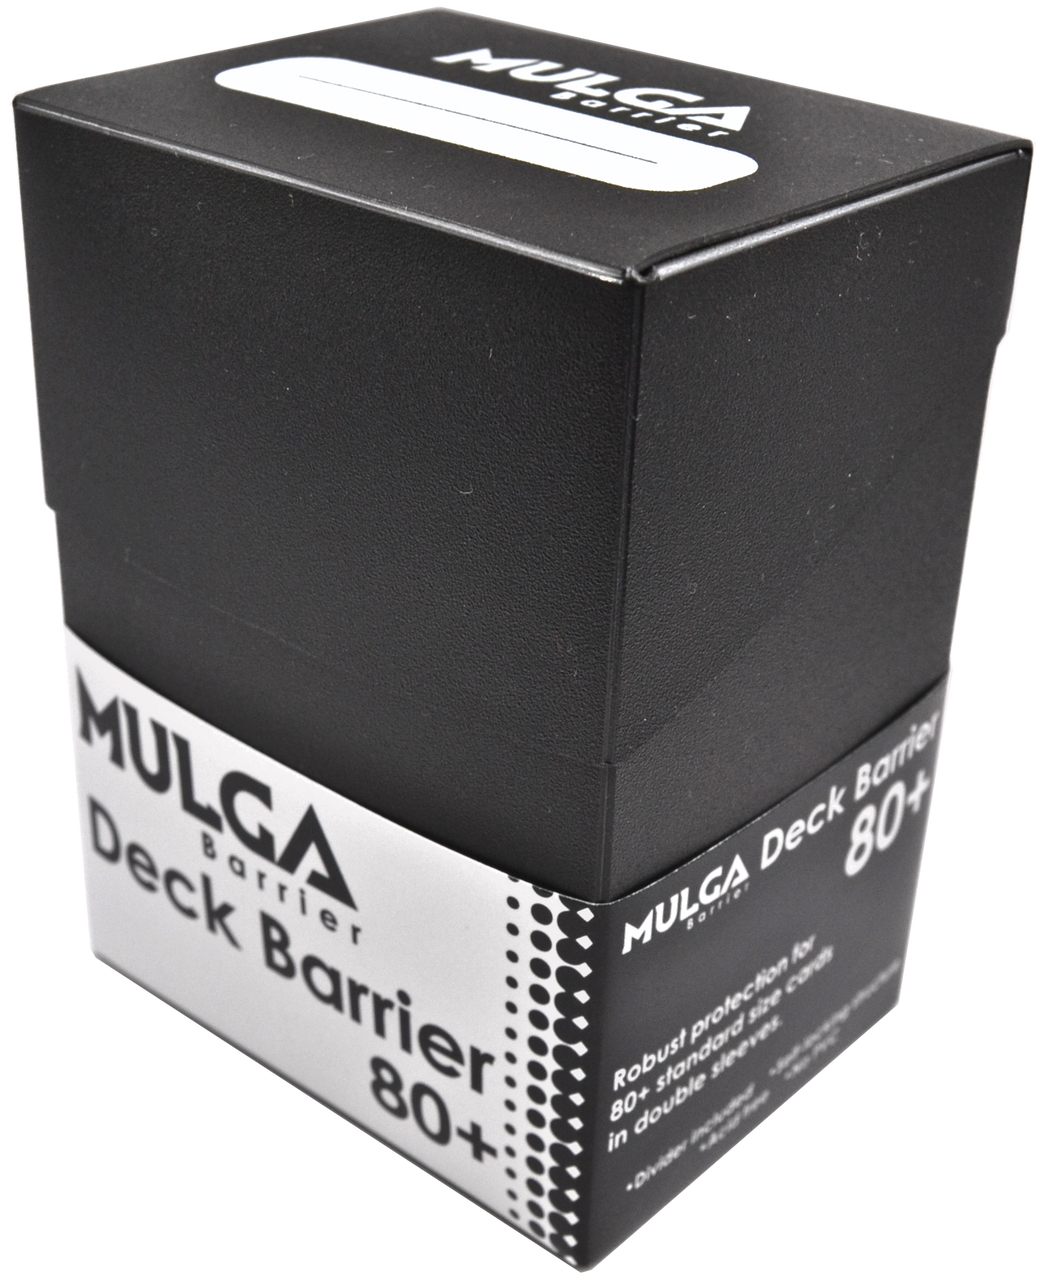 MULGA Deck Barrier 80+ Black